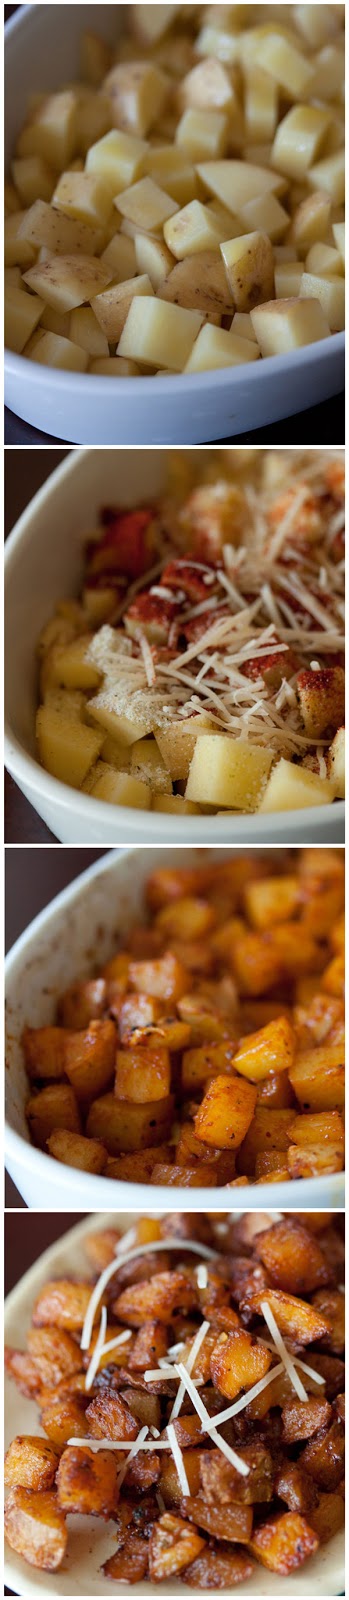 Parmesan Roasted Potatoes Recipe